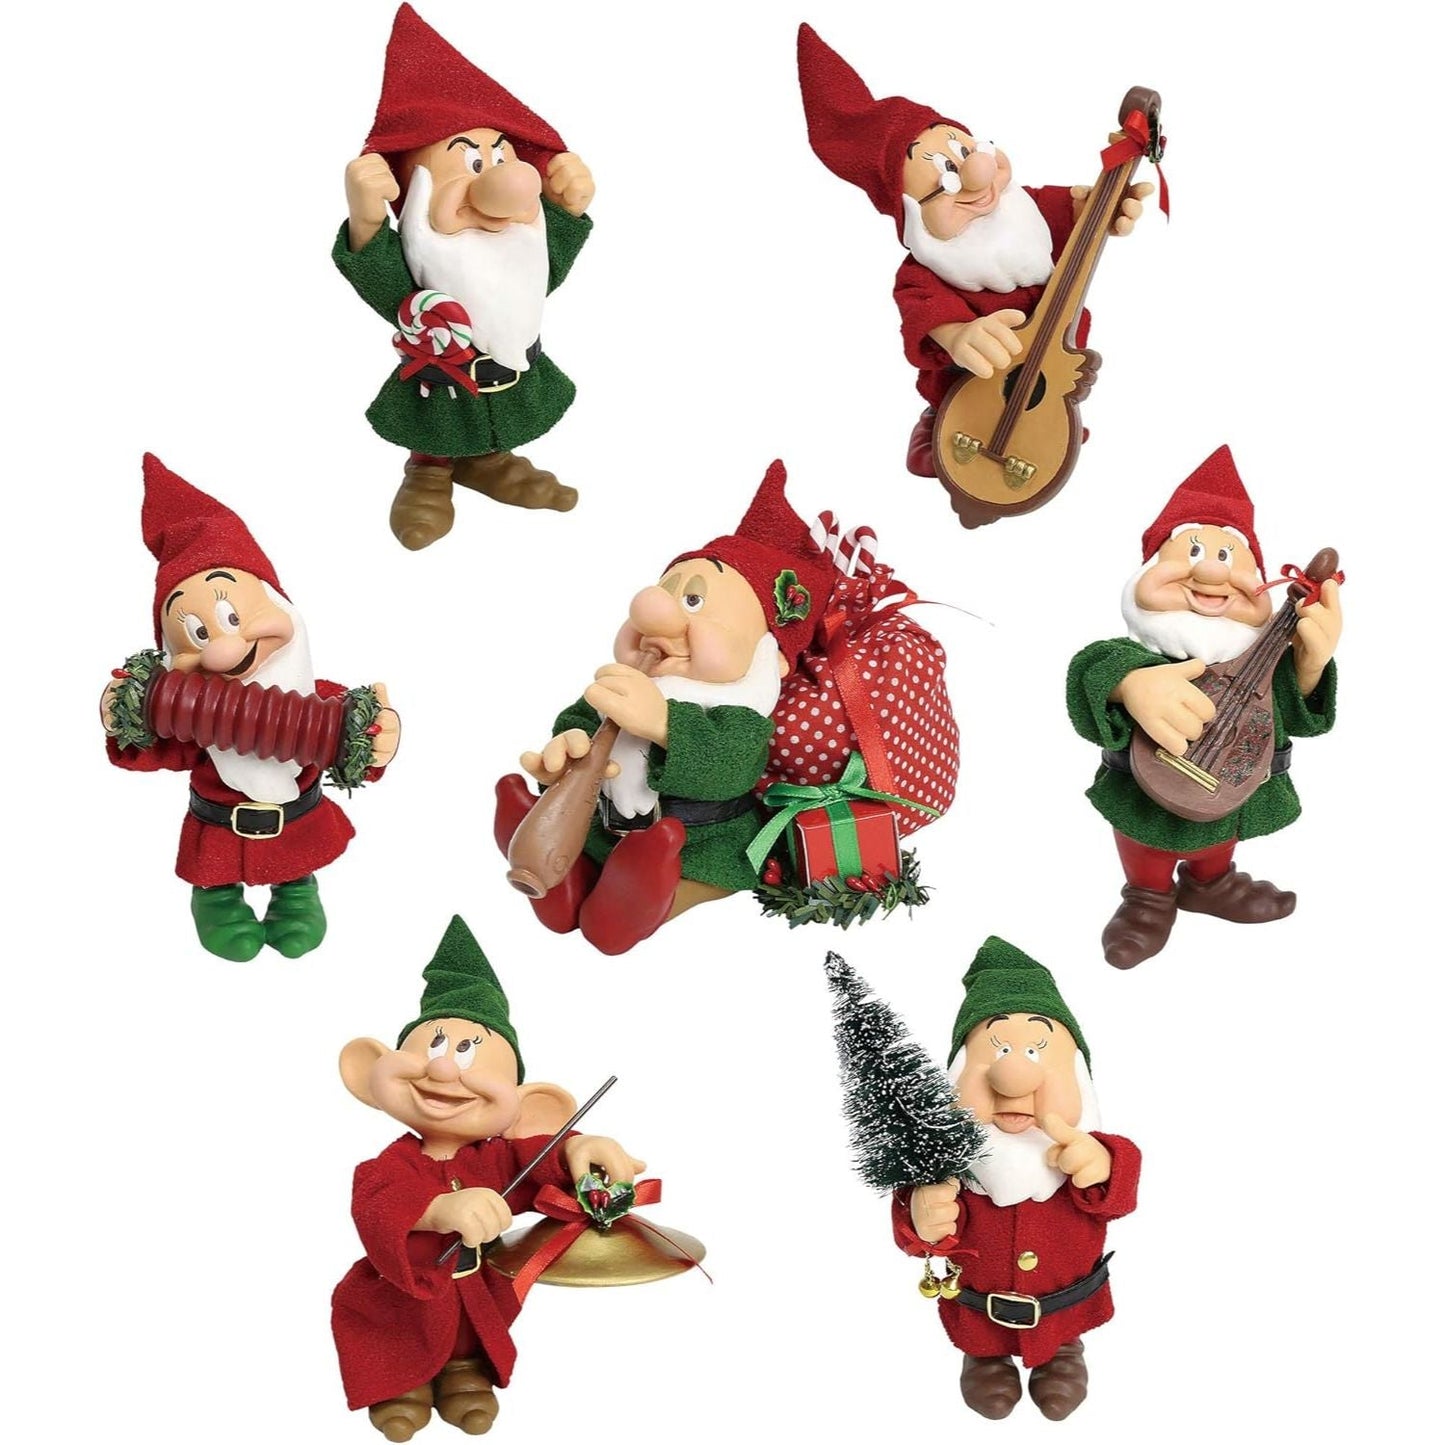 Possible Dreams Disney Seven Dwarfs Christmas Celebration Figurines